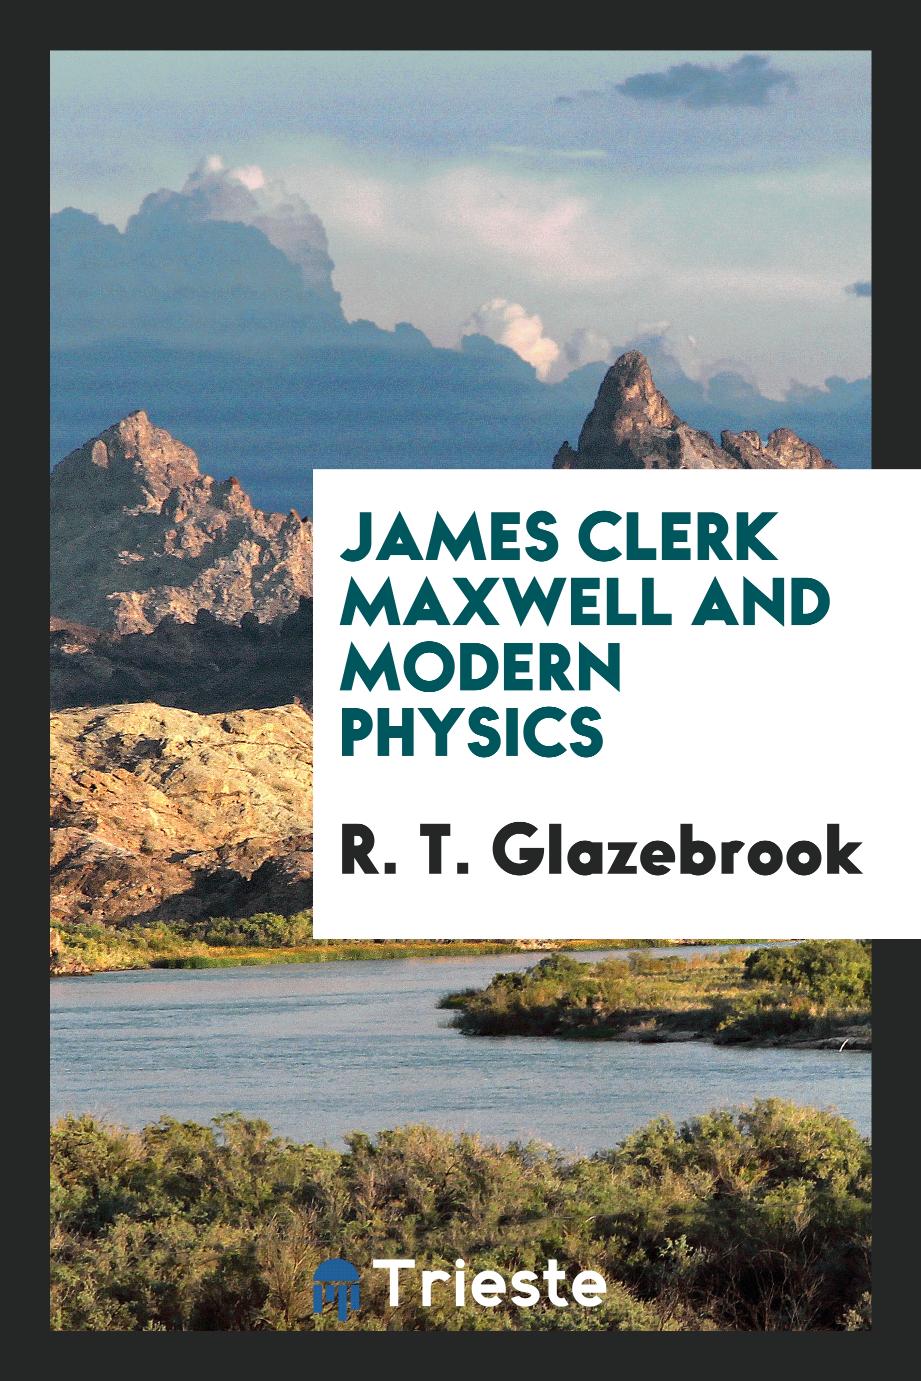 James Clerk Maxwell and modern physics